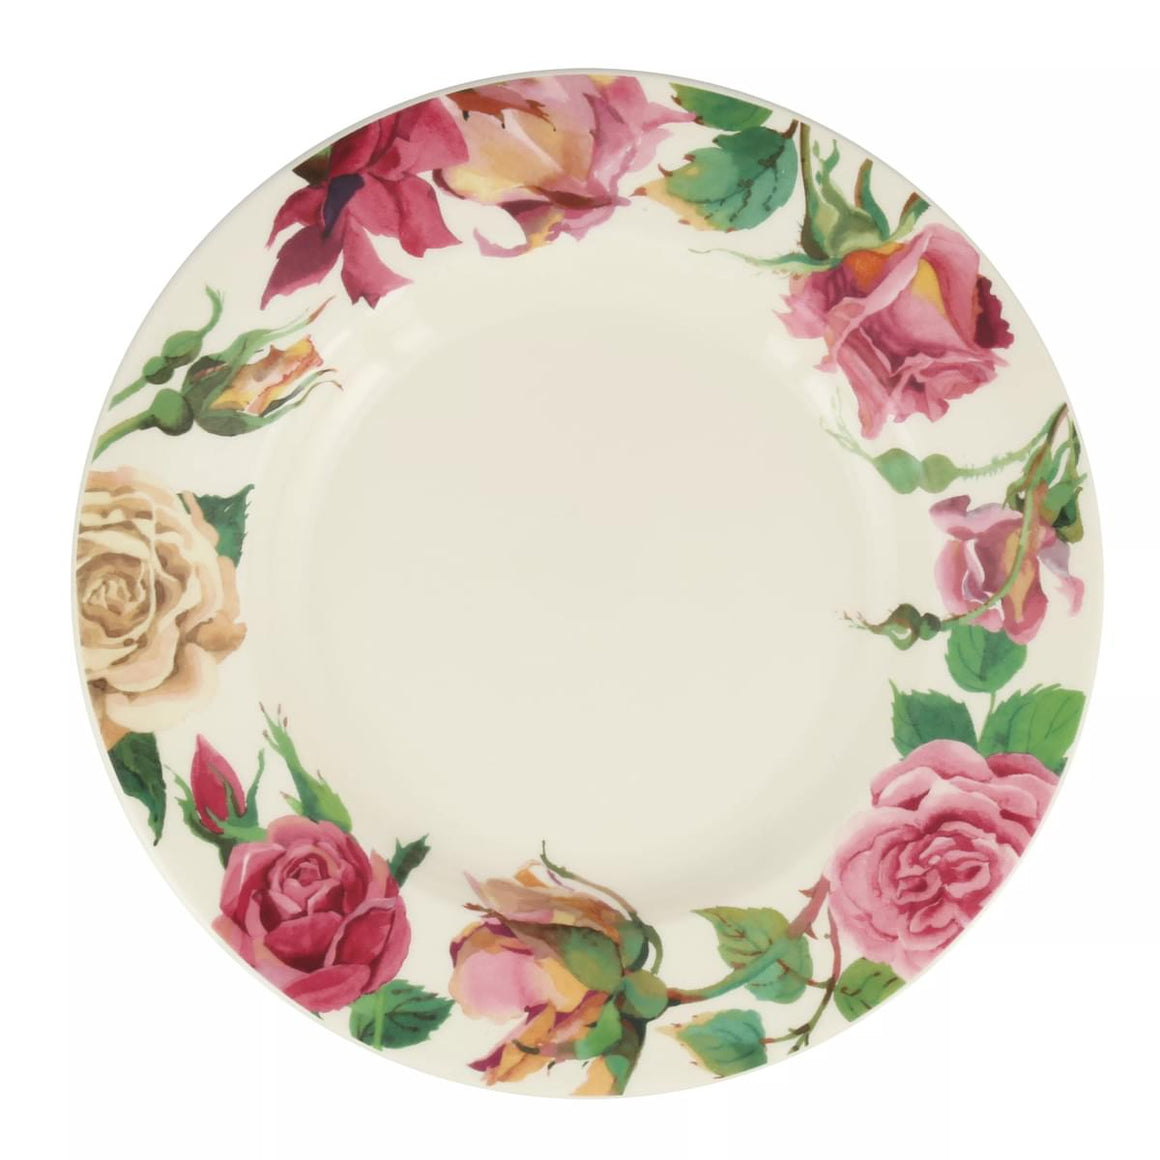 Emma Bridgewater Roses All My Life 10.5" Dinner Plate